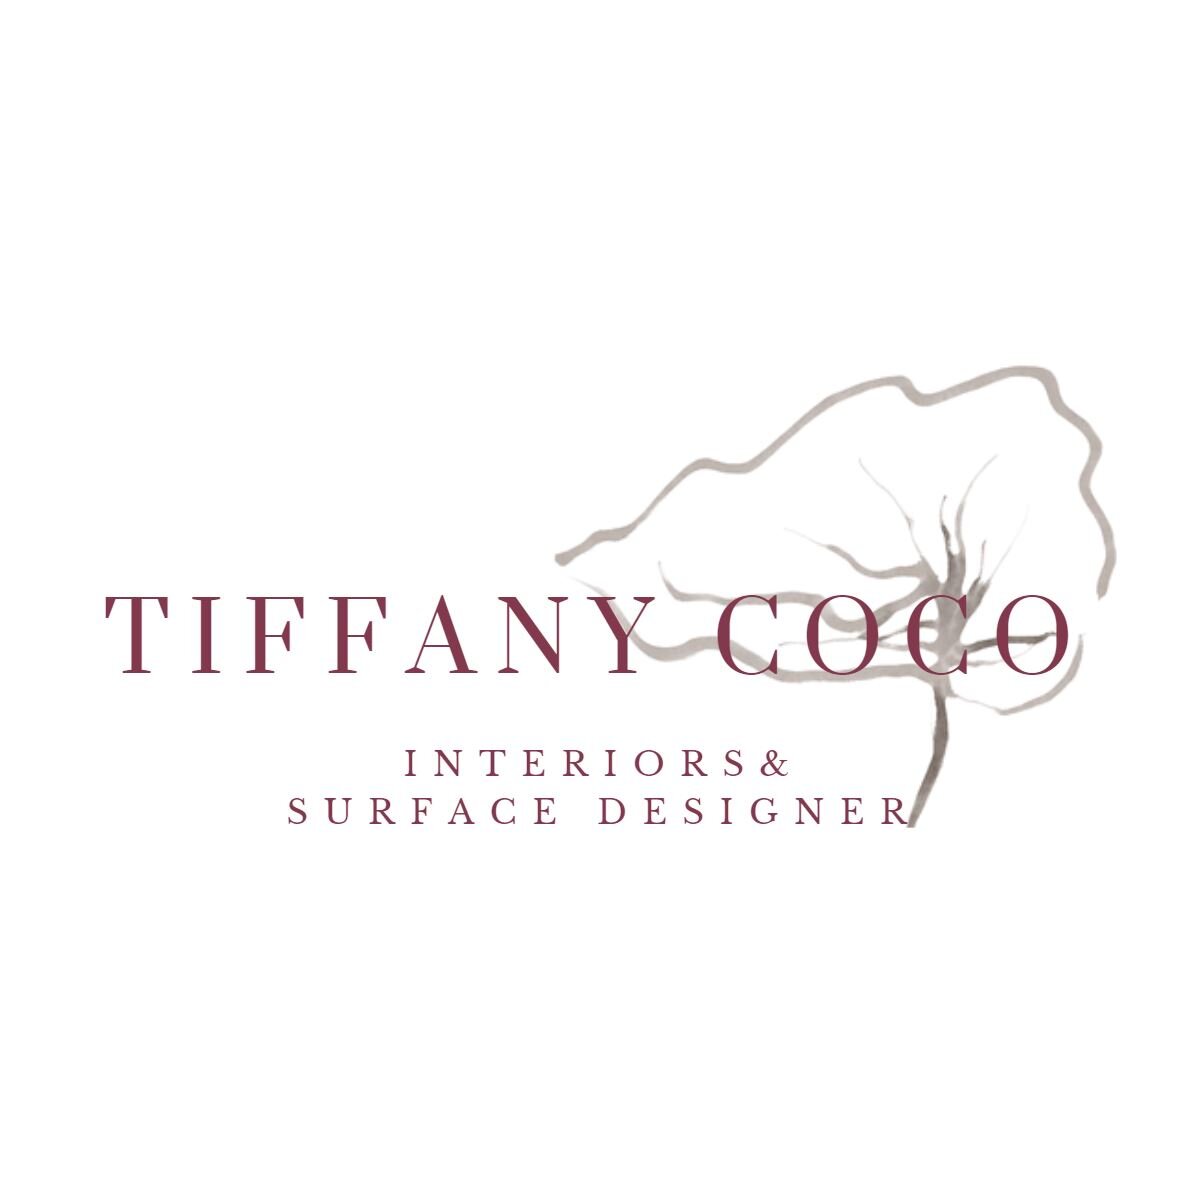 Tiffany Coco